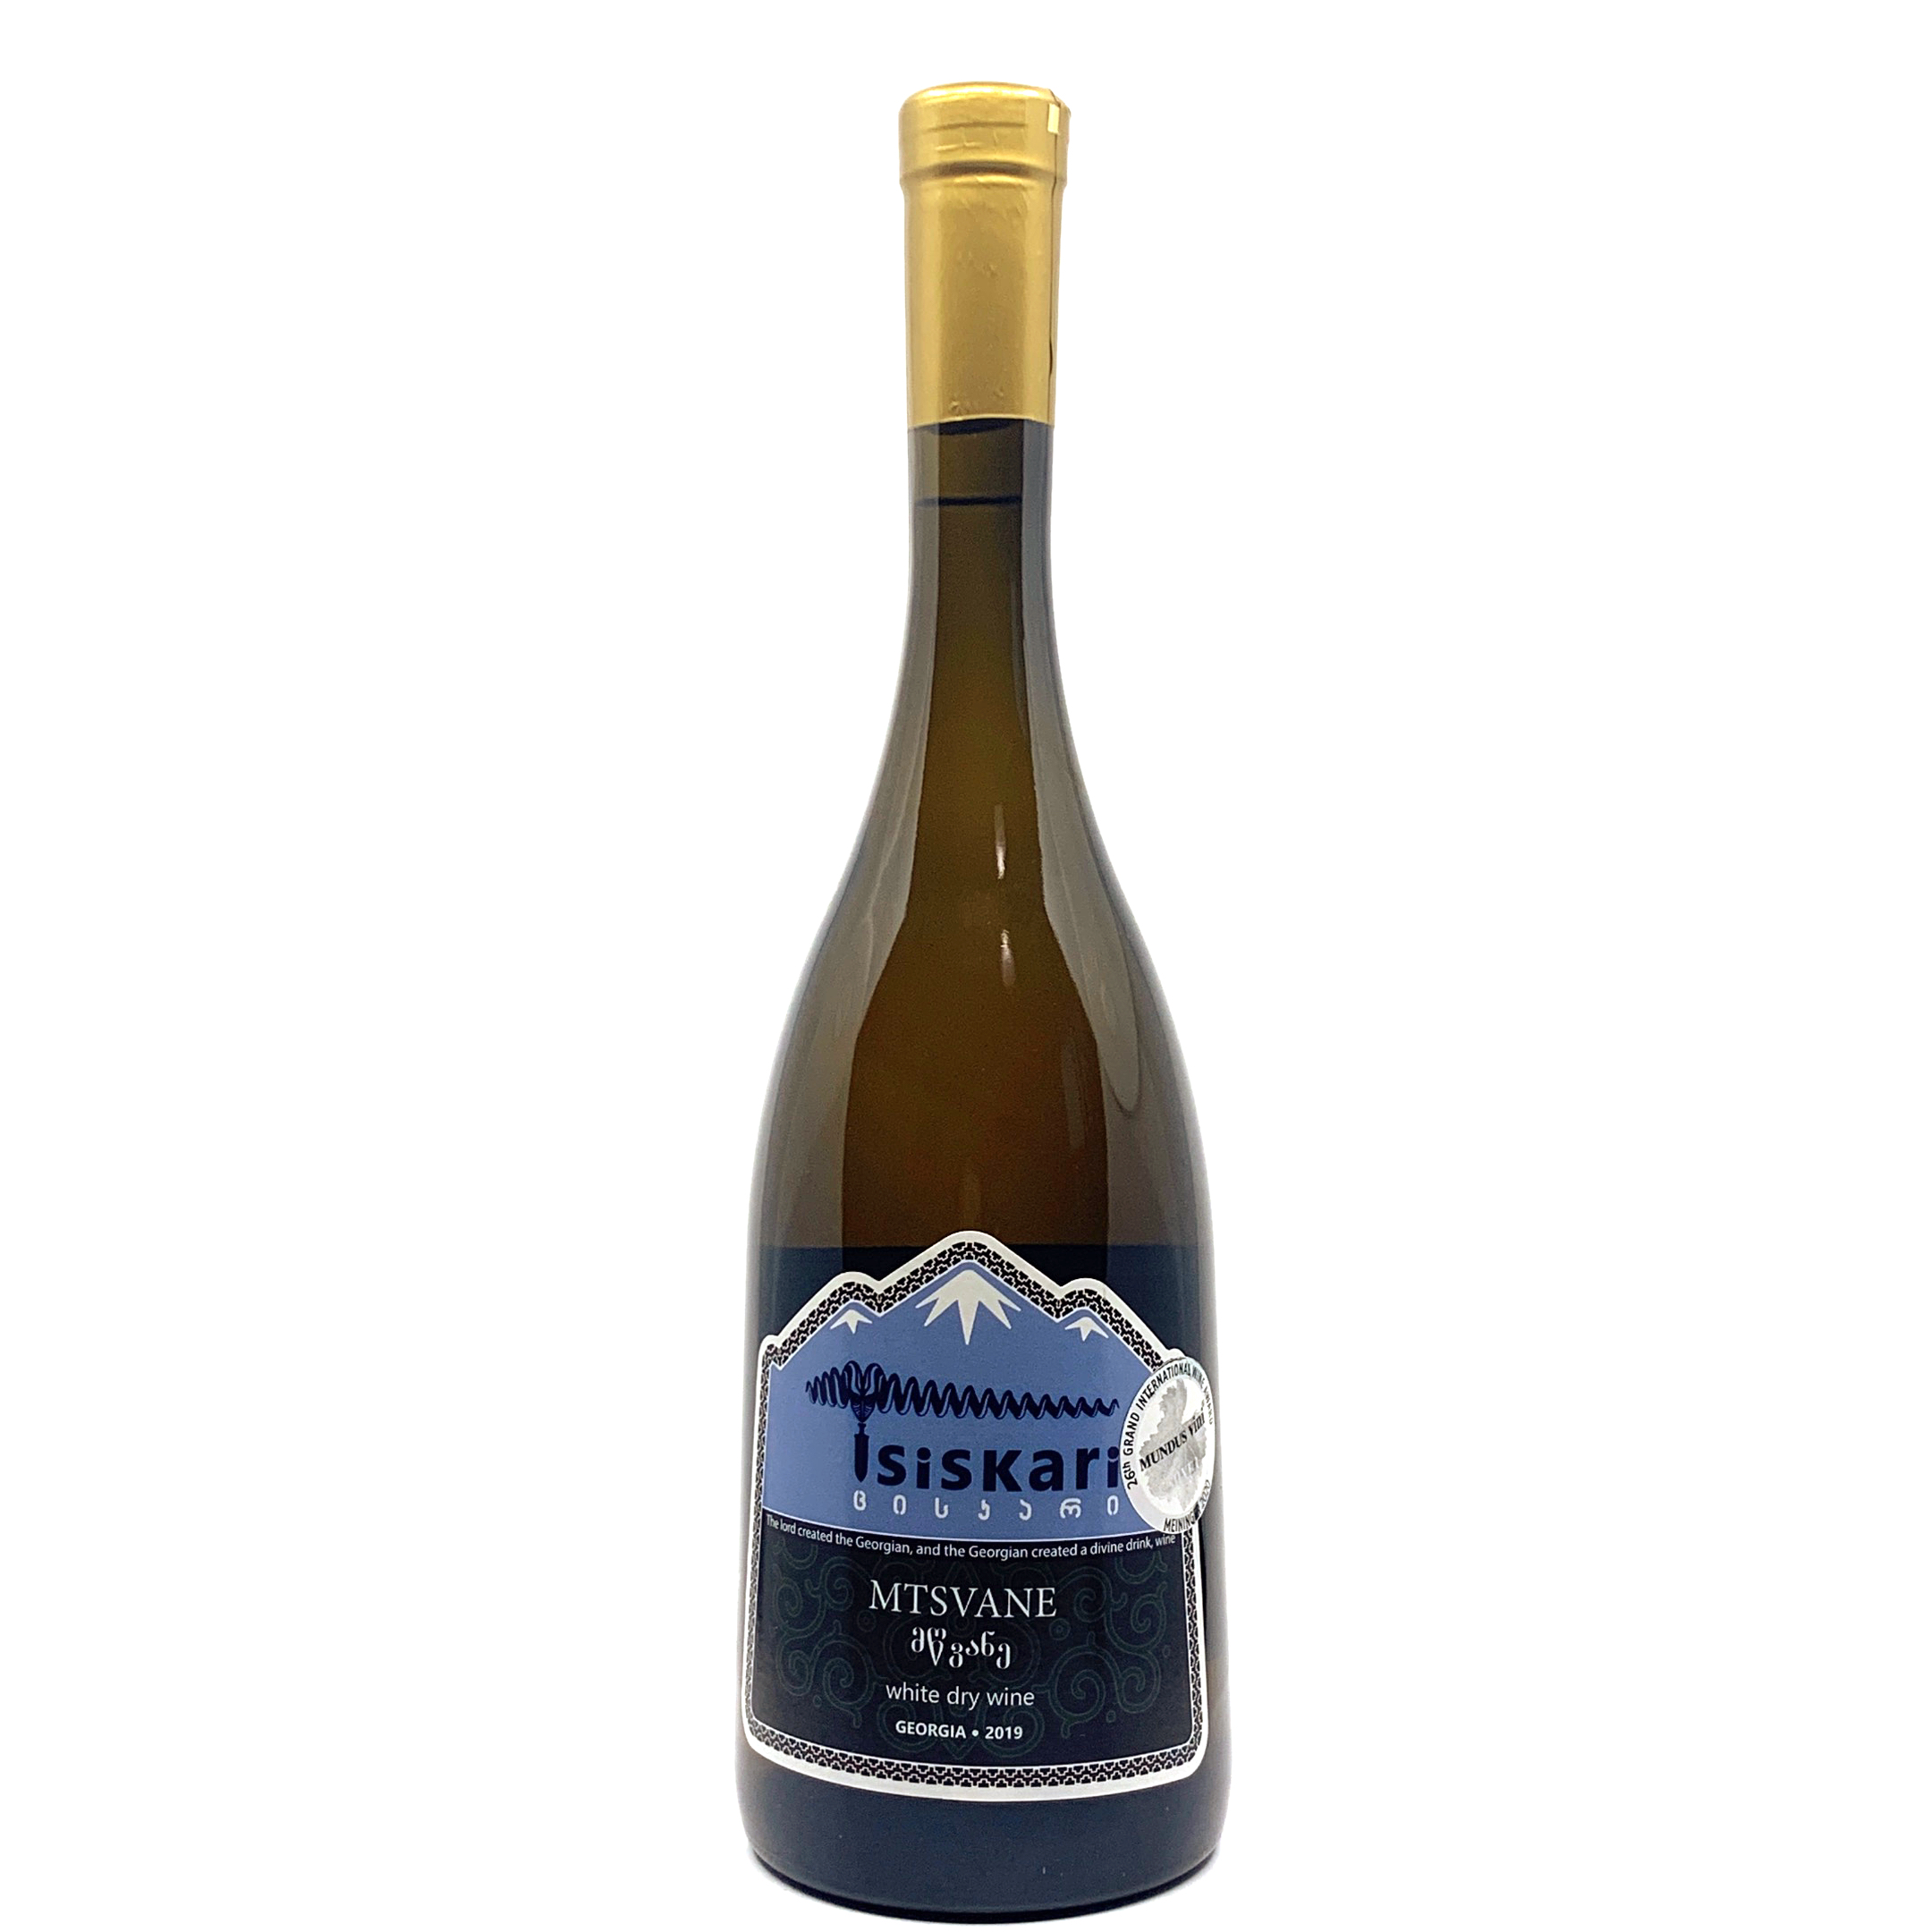 Tsiskari Mtsvane suché bílé gruzínské víno 2019 0,75l